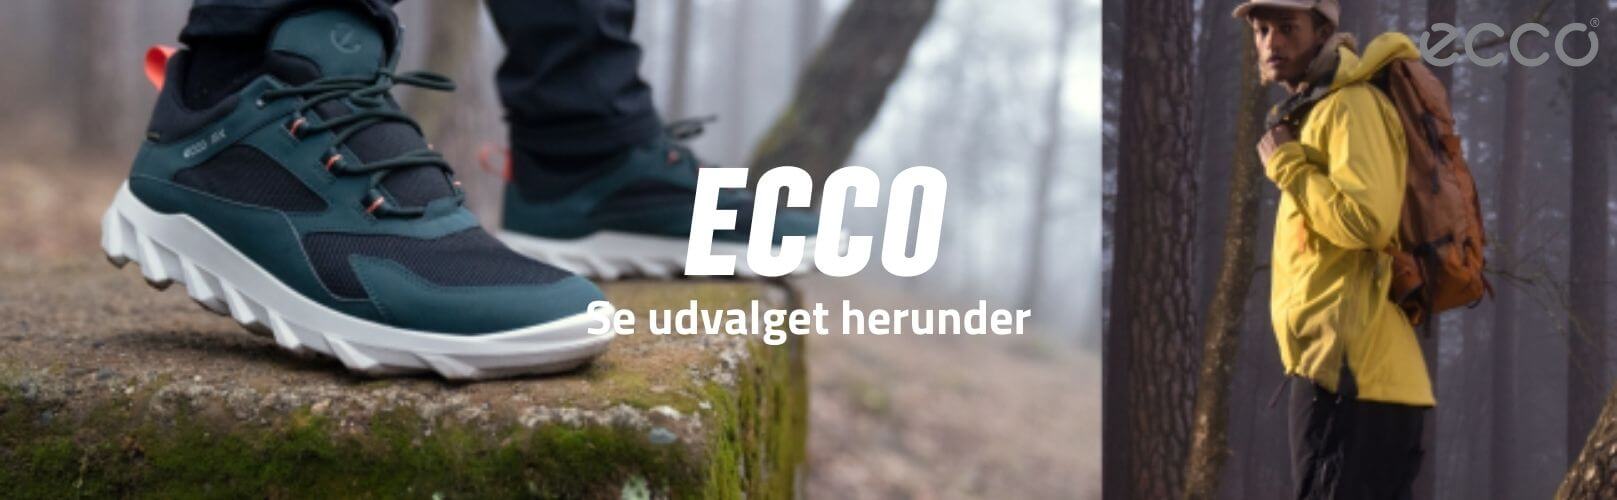 ECCO brand banner